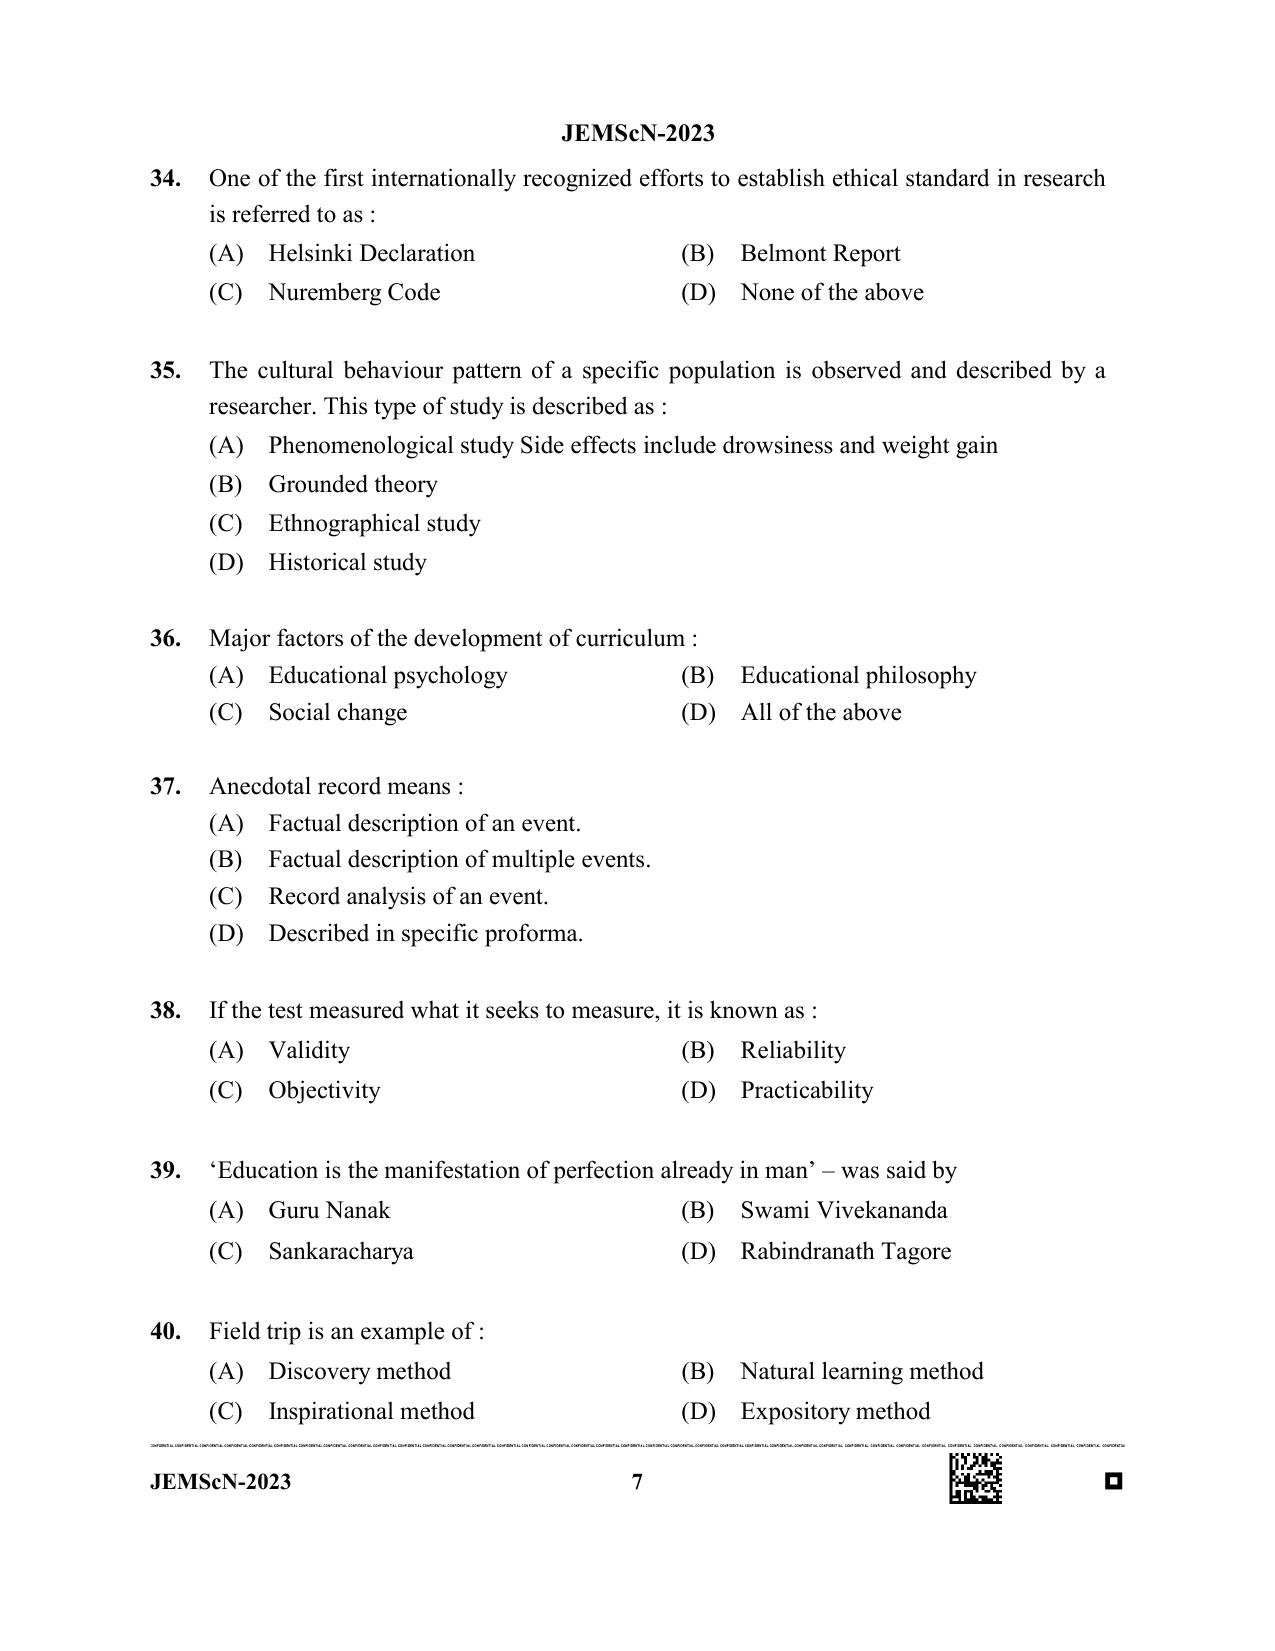 WB JEMScN 2023 Question Paper - Page 7